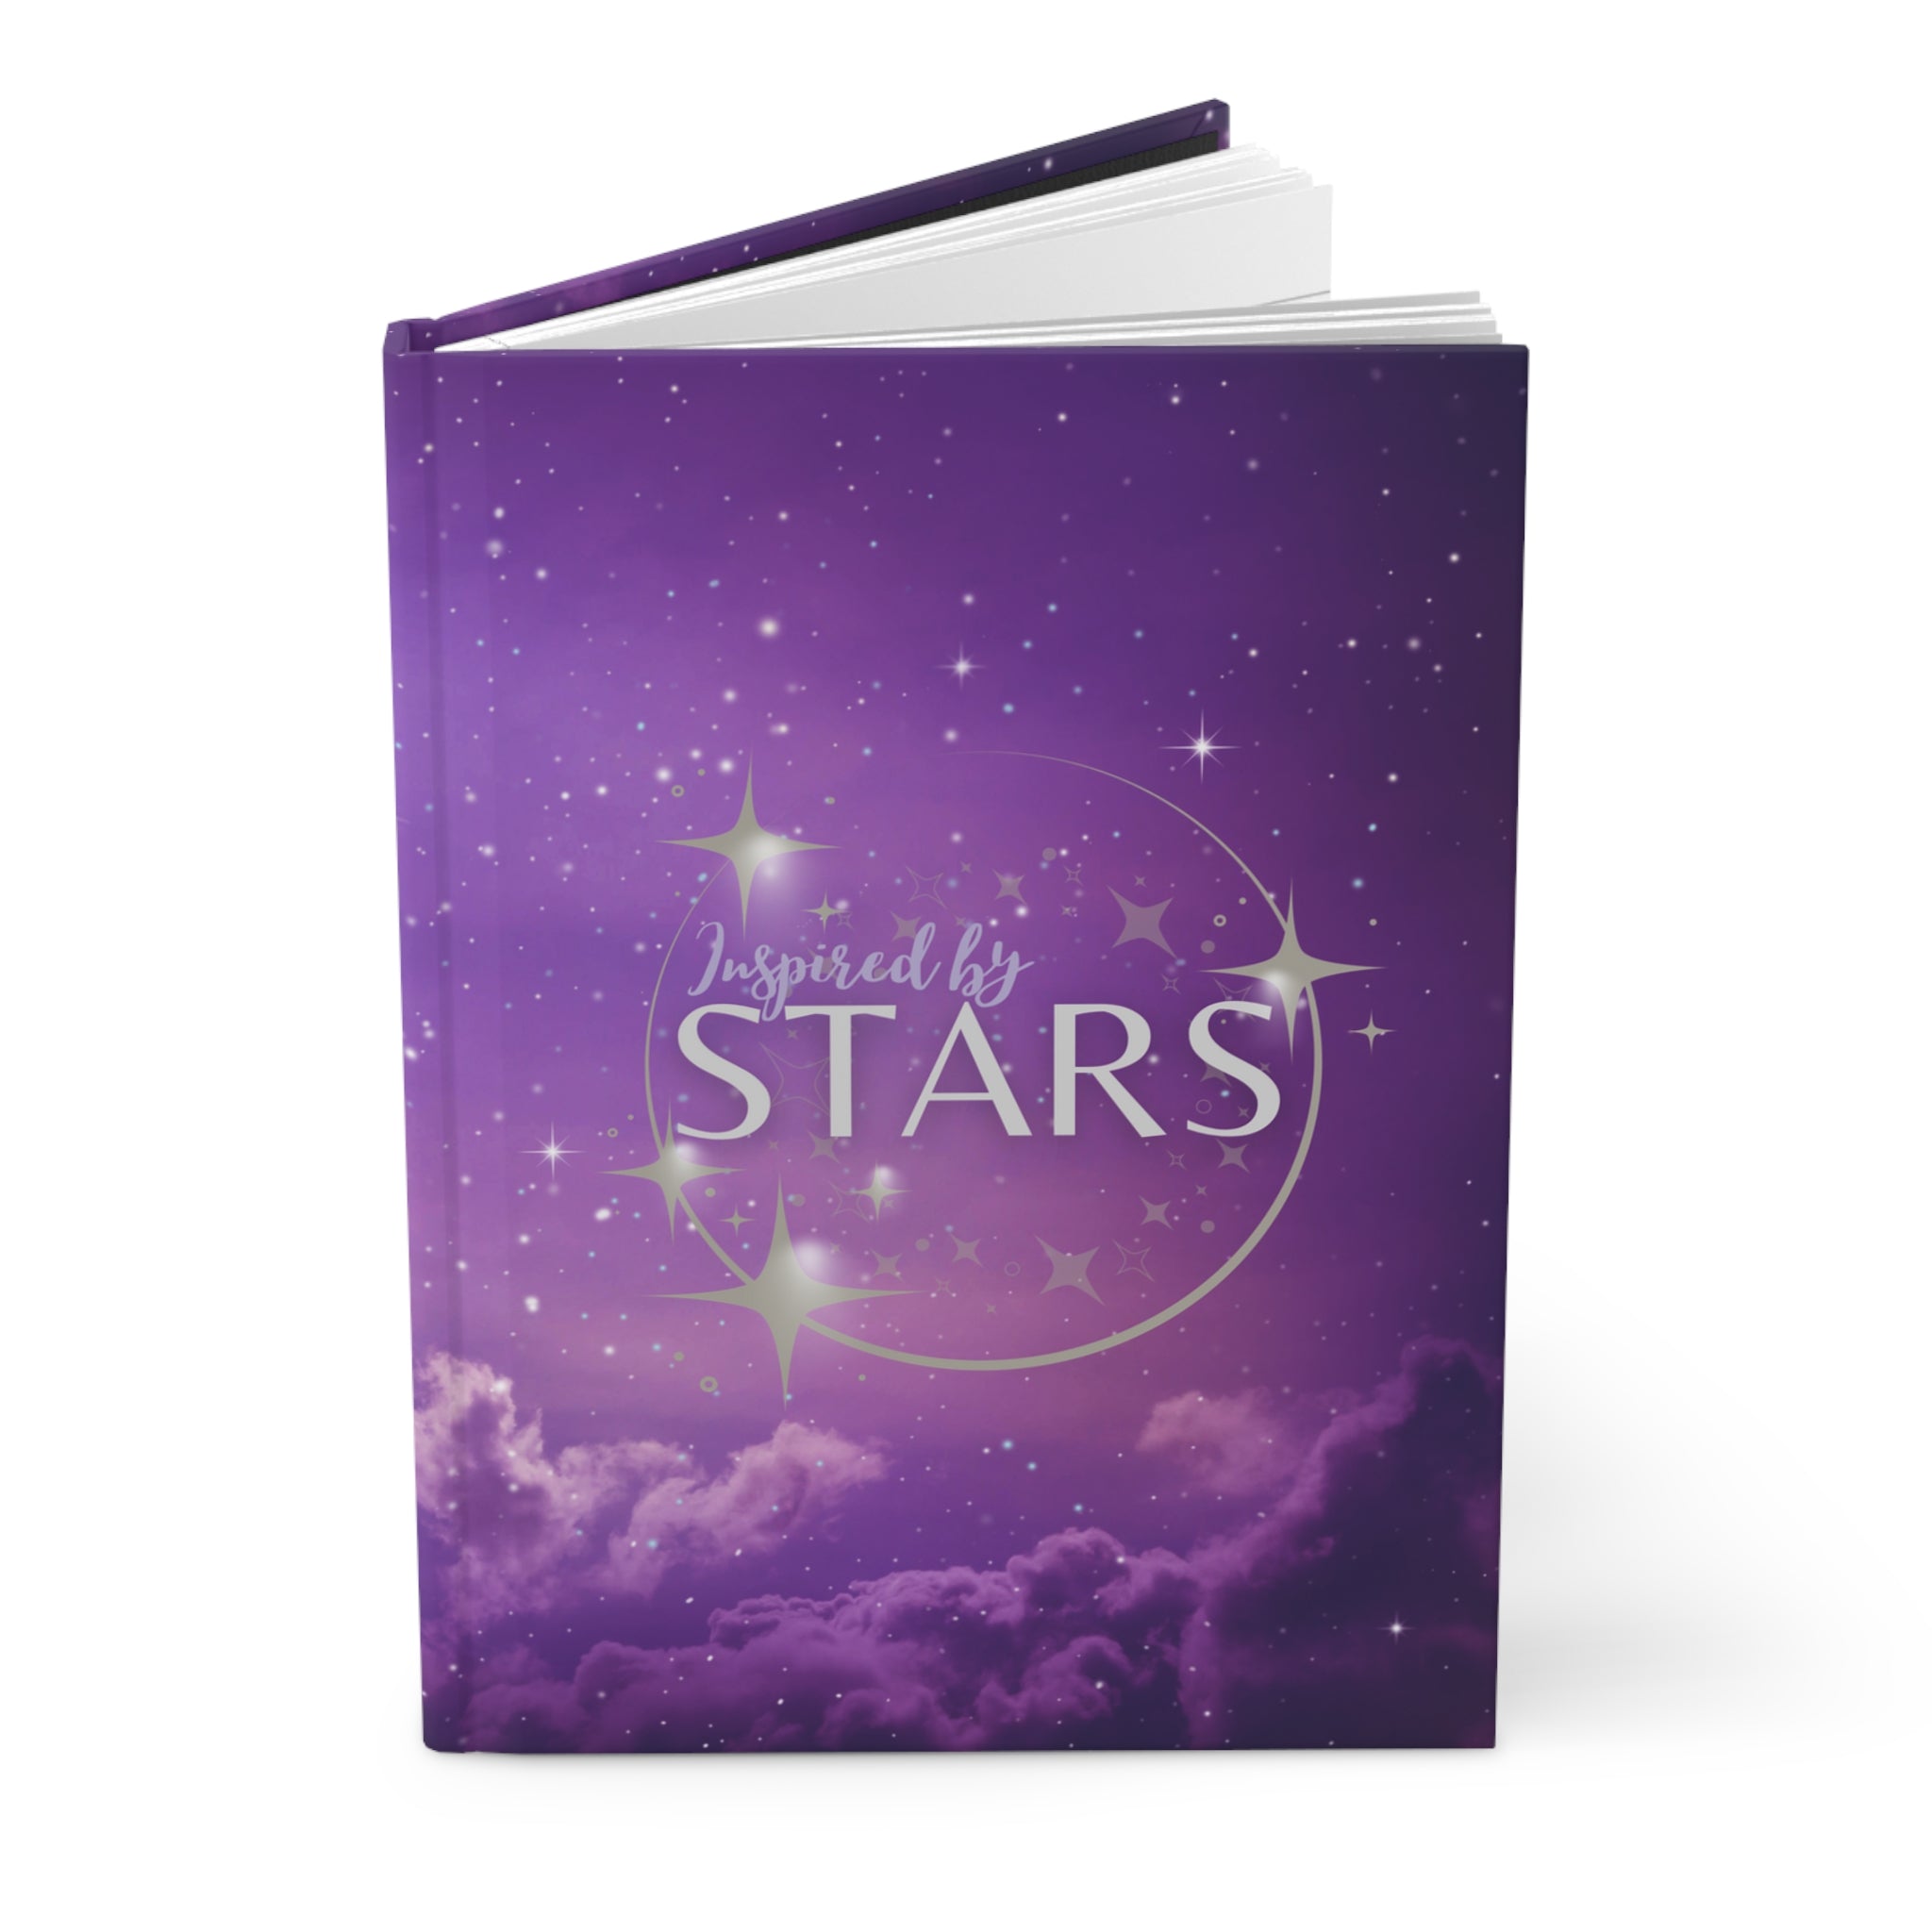 Inspired By Stars Hardcover Journal